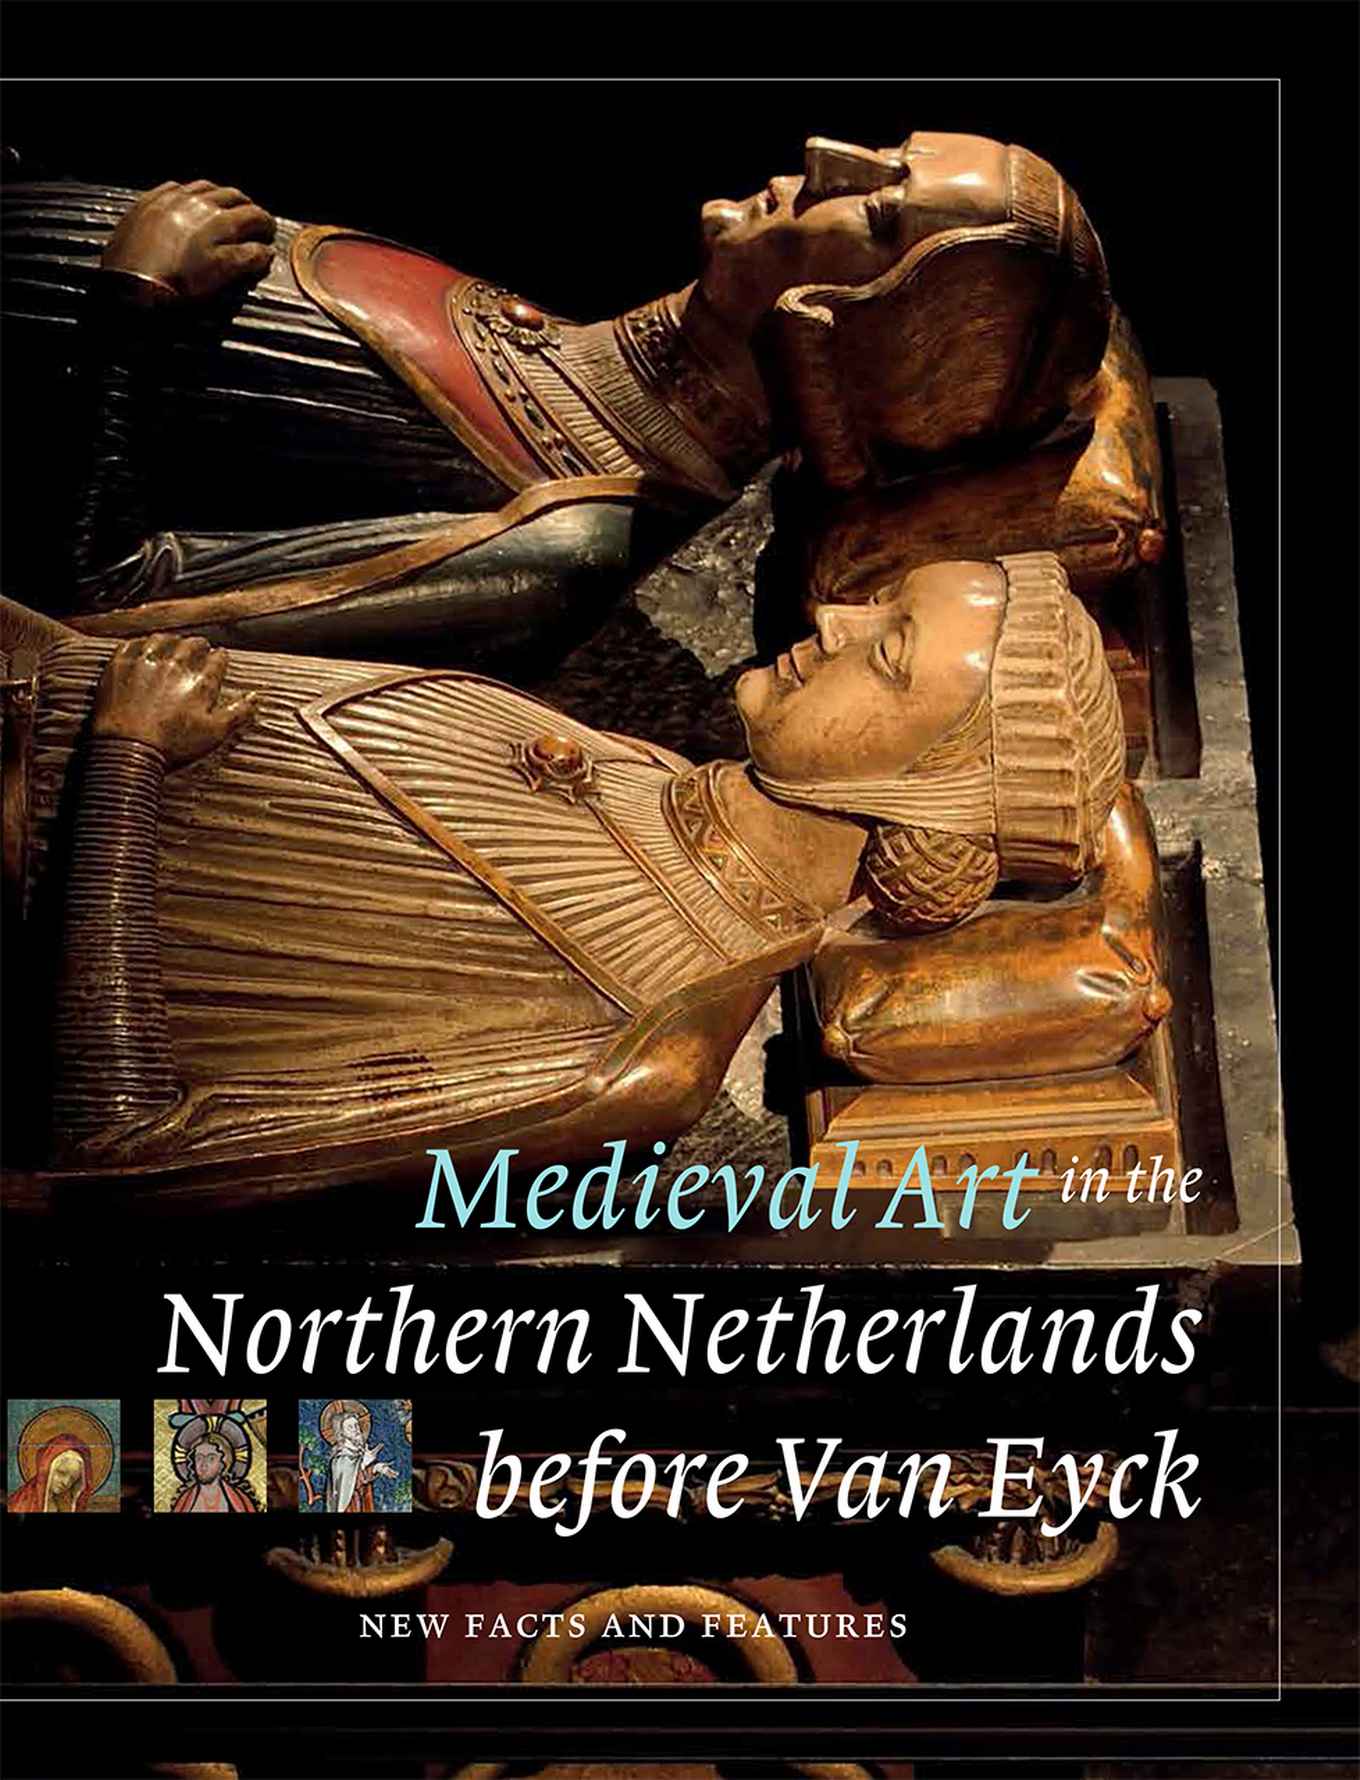 Medieval art in the Northern Netherlands before Van Eyck